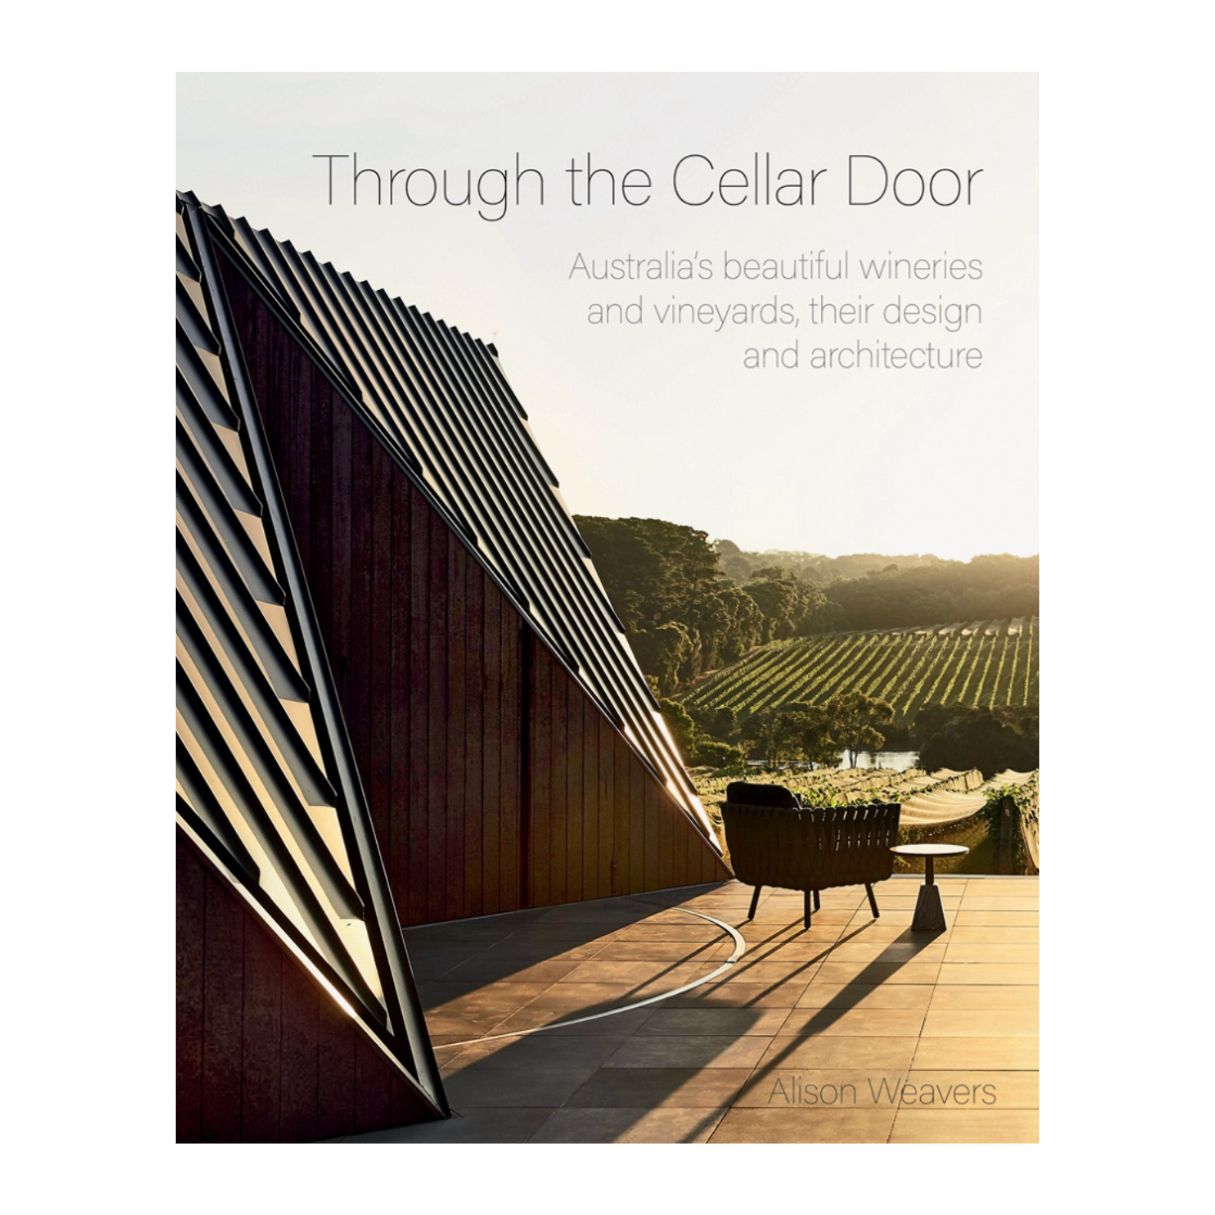 Through the cellar door: Australia's beautiful wineries and vineyards